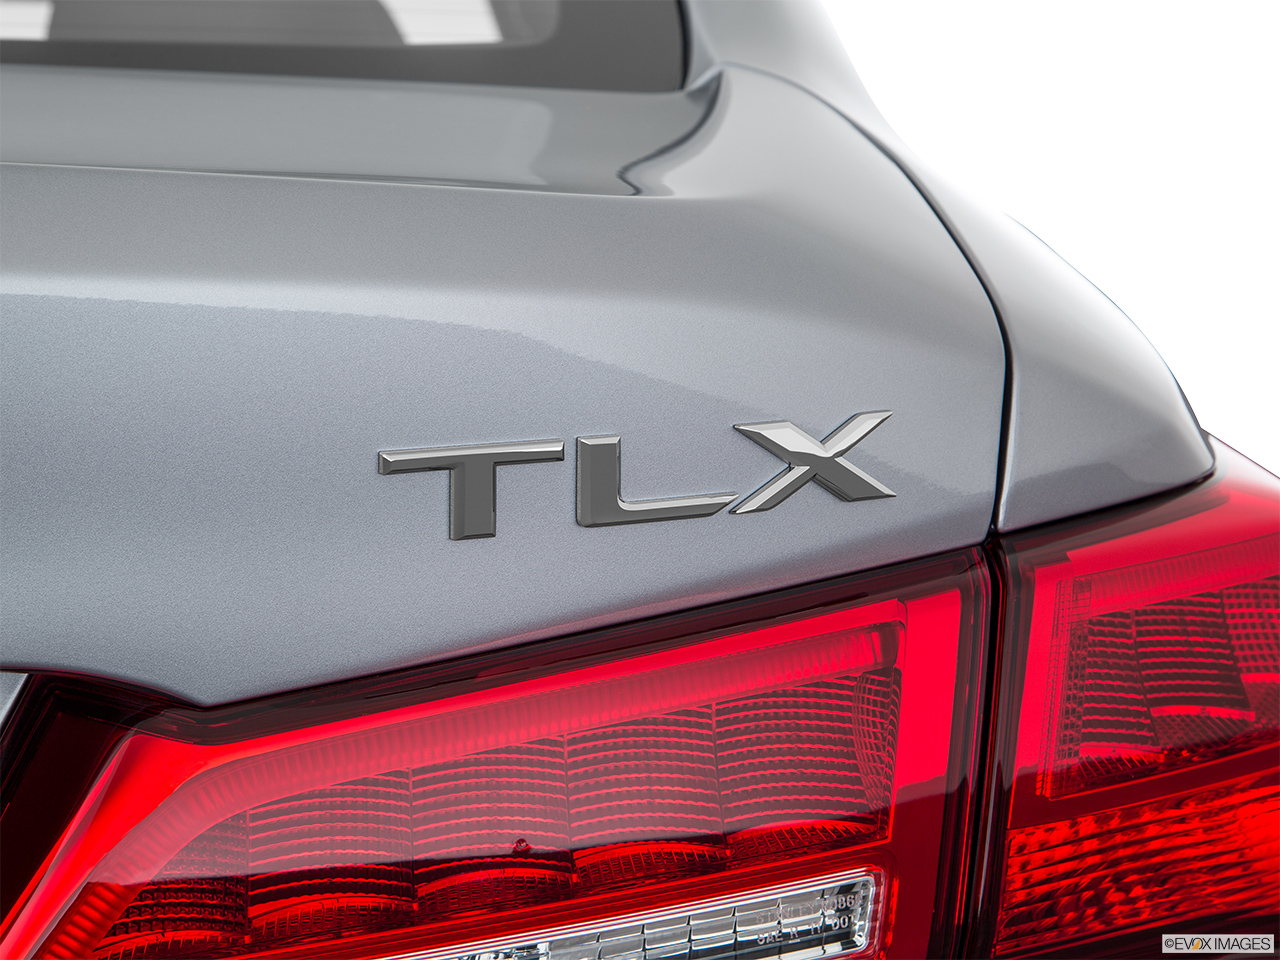 2020 Acura TLX 2.4 8-DCT P-AWS Rear model badge/emblem 